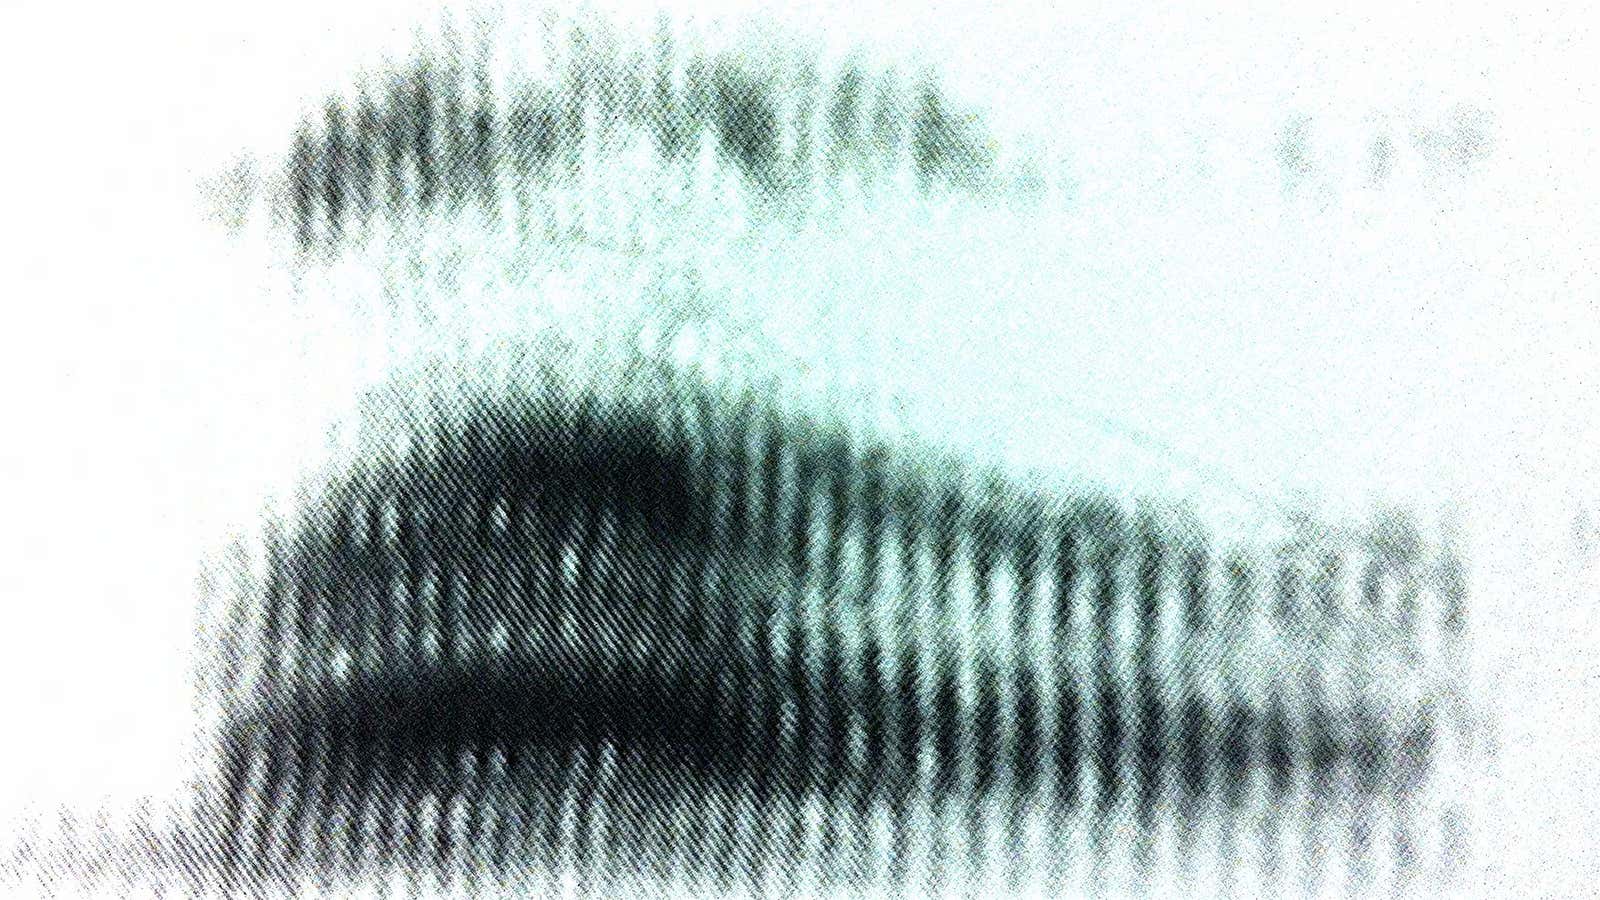 A spectrogram for “whoa.”